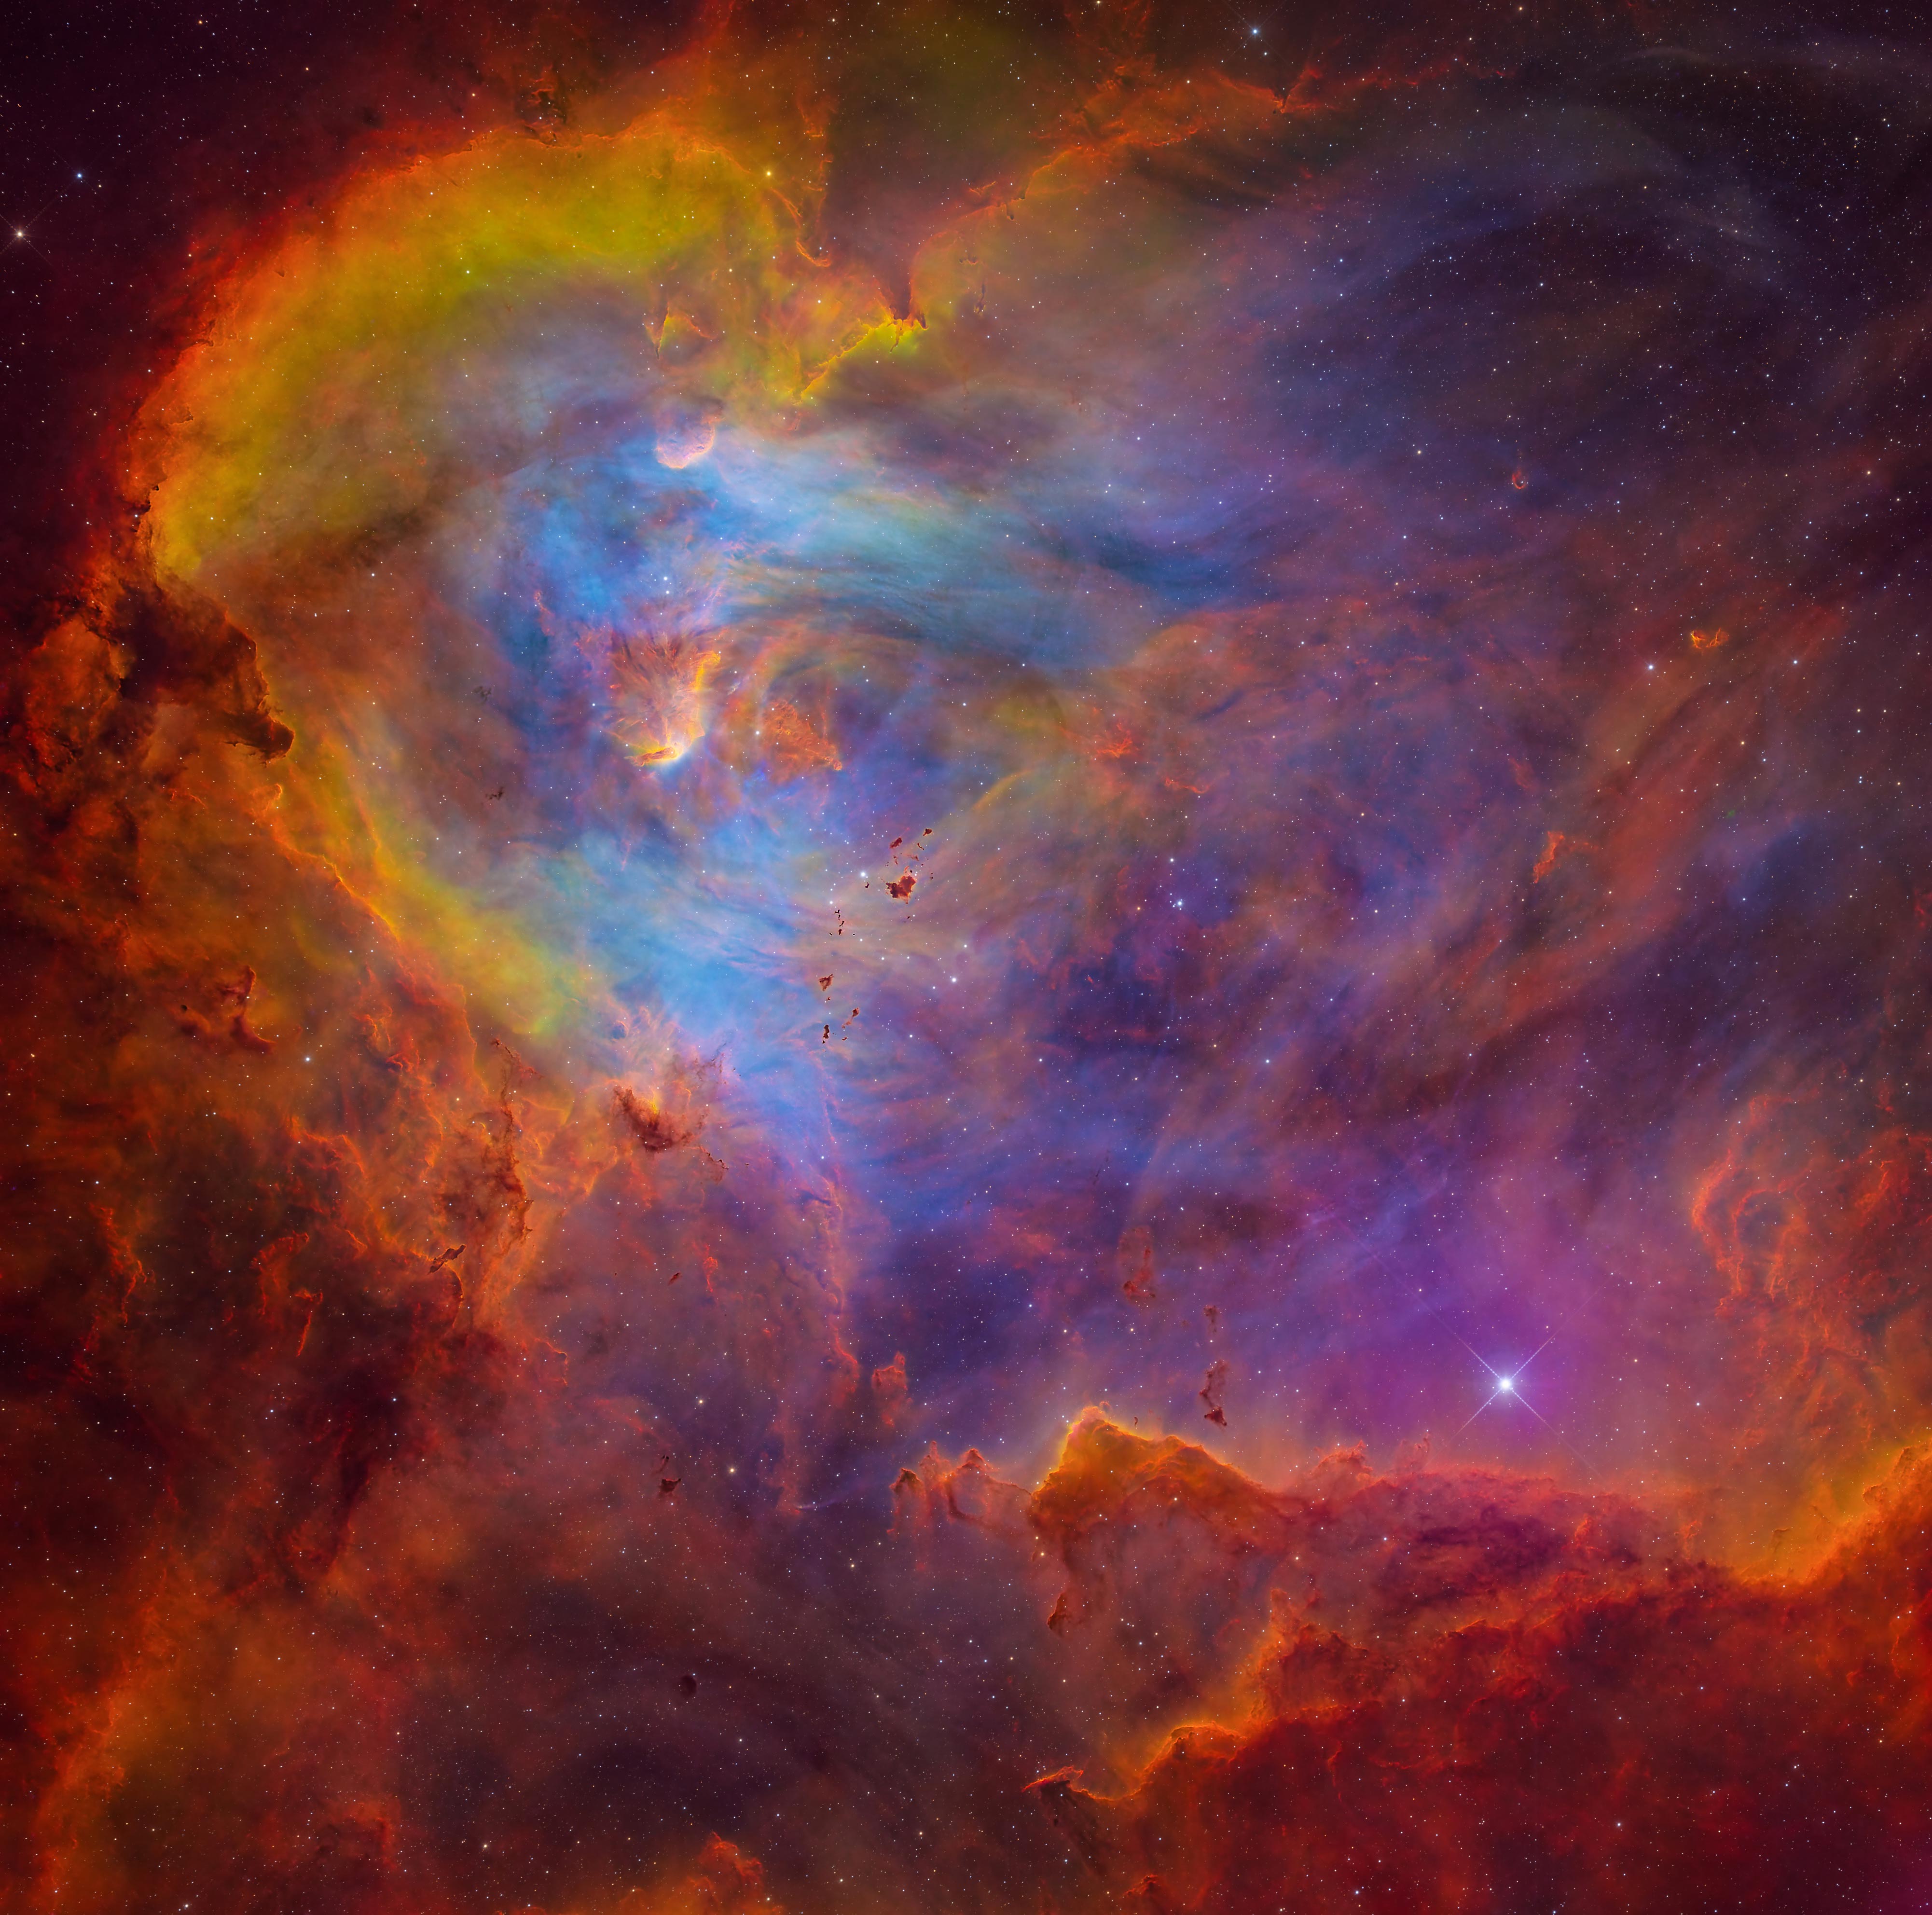 a gaseous nebula with vibrant swirls of many colors.